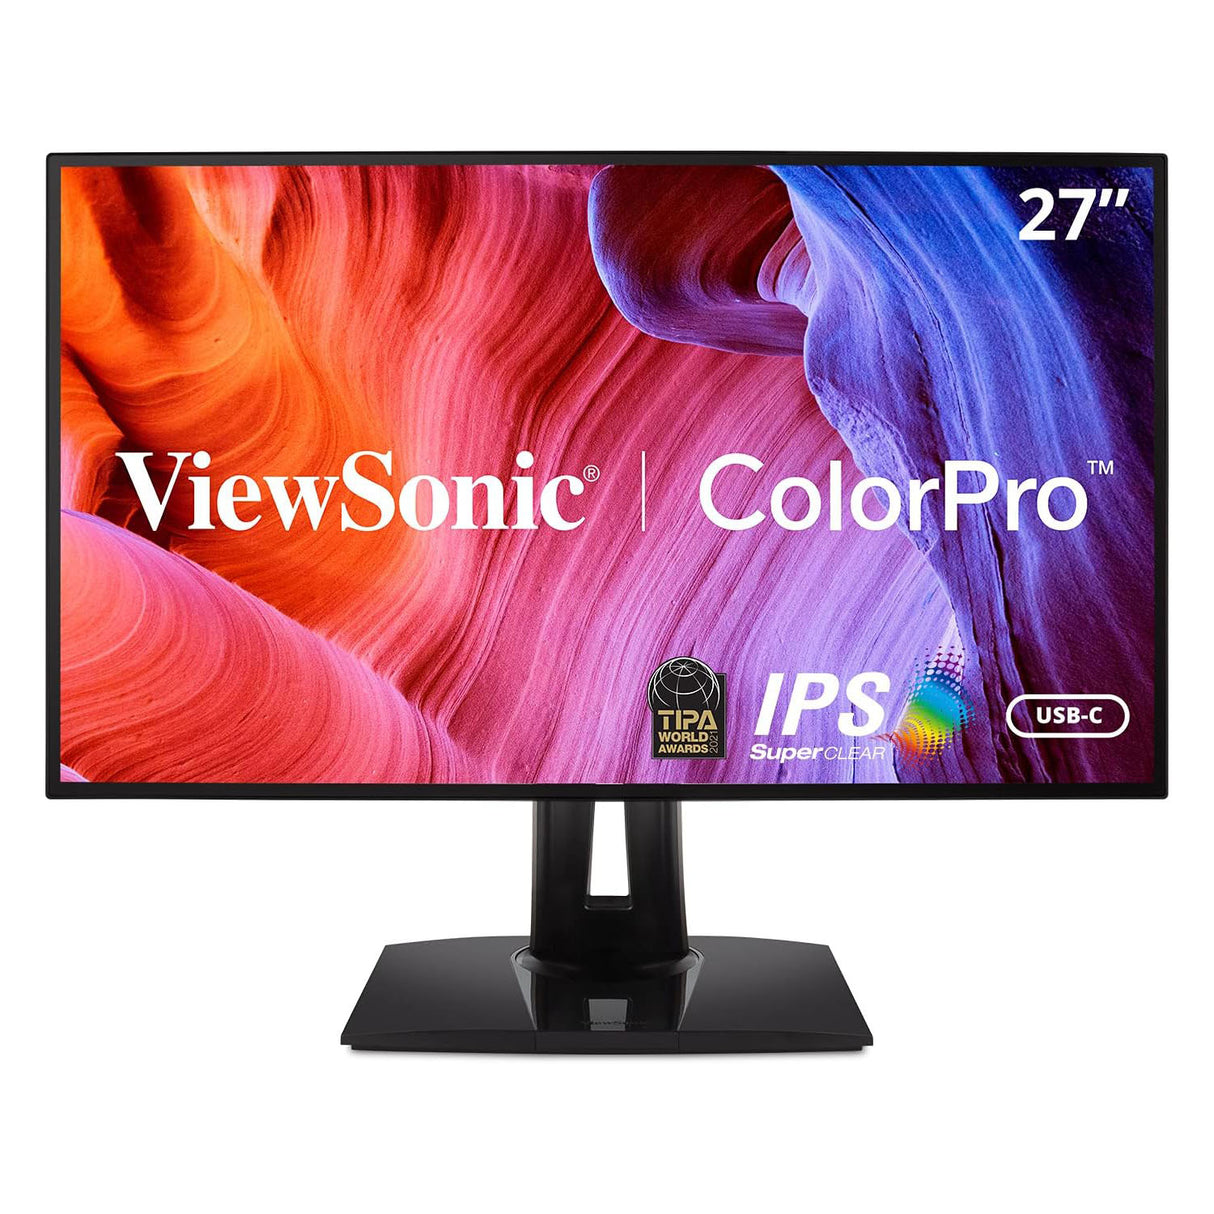 ViewSonic VP2768a - 27" IPS Monitor - QHD 1440P, 100% sRGB - New